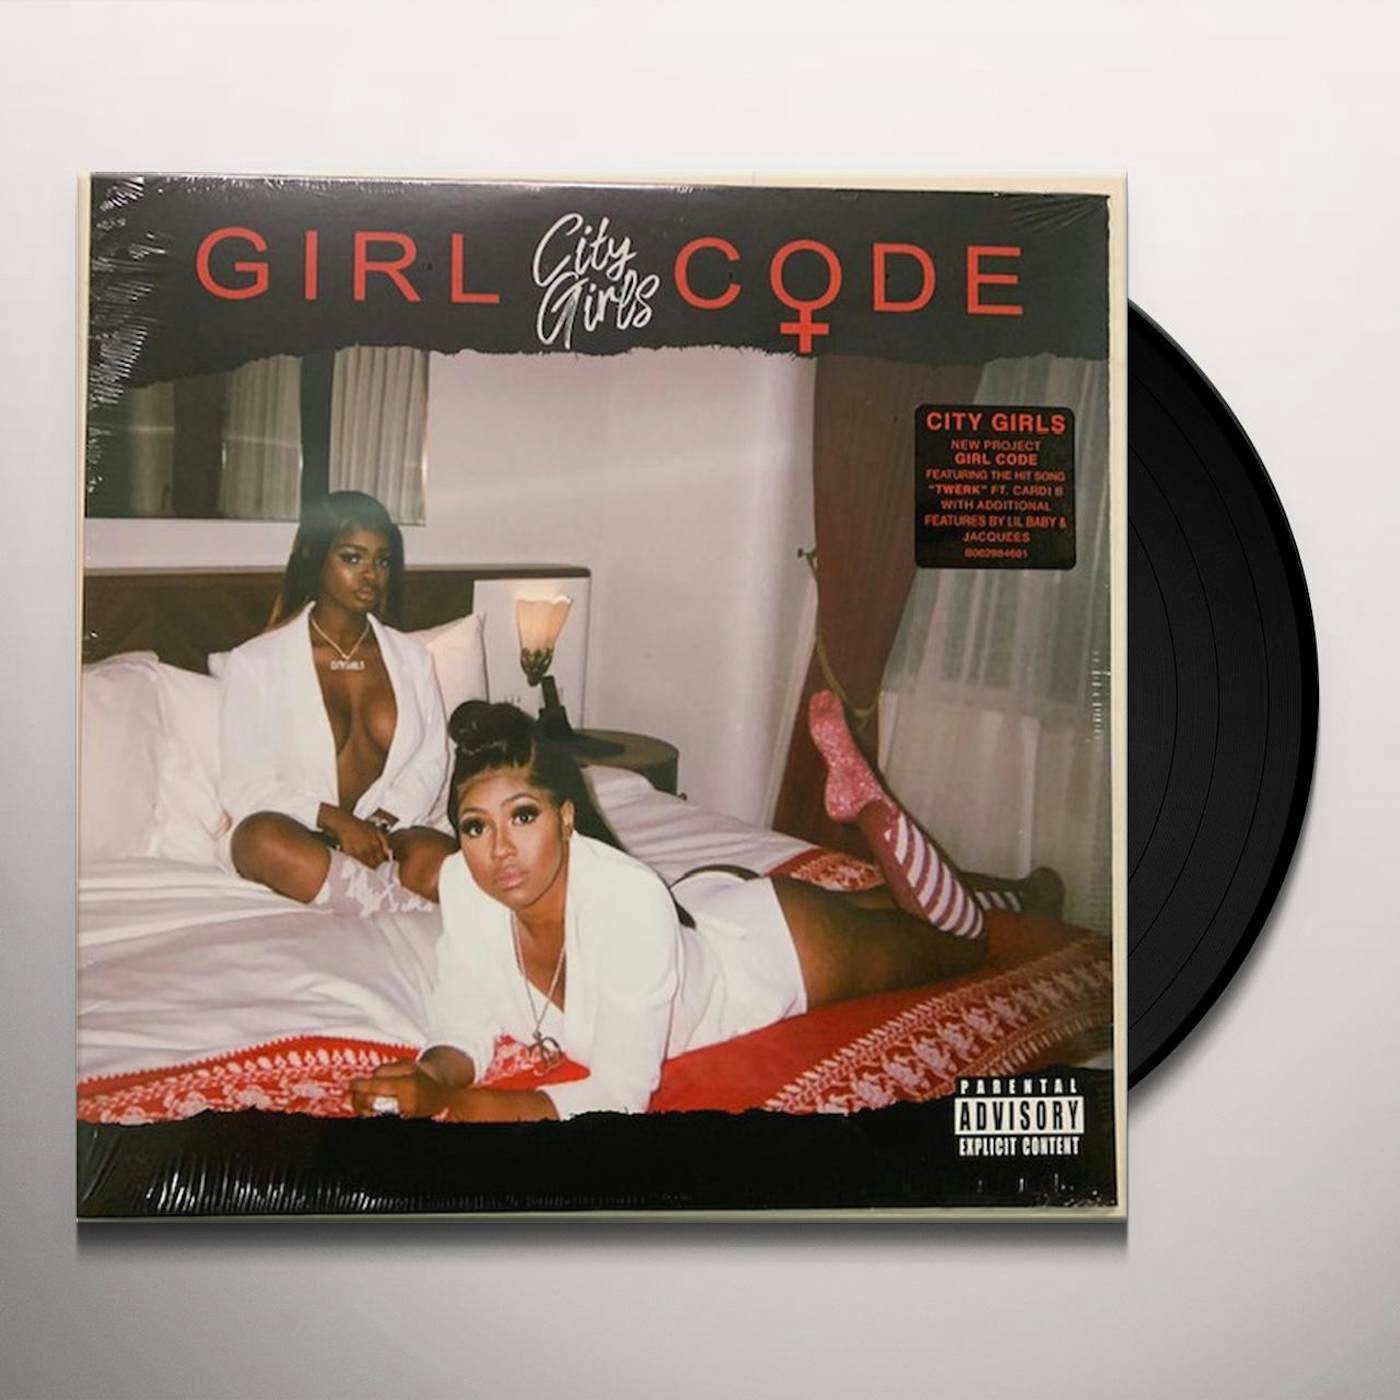 City Girls GIRL CODE (X) Vinyl Record